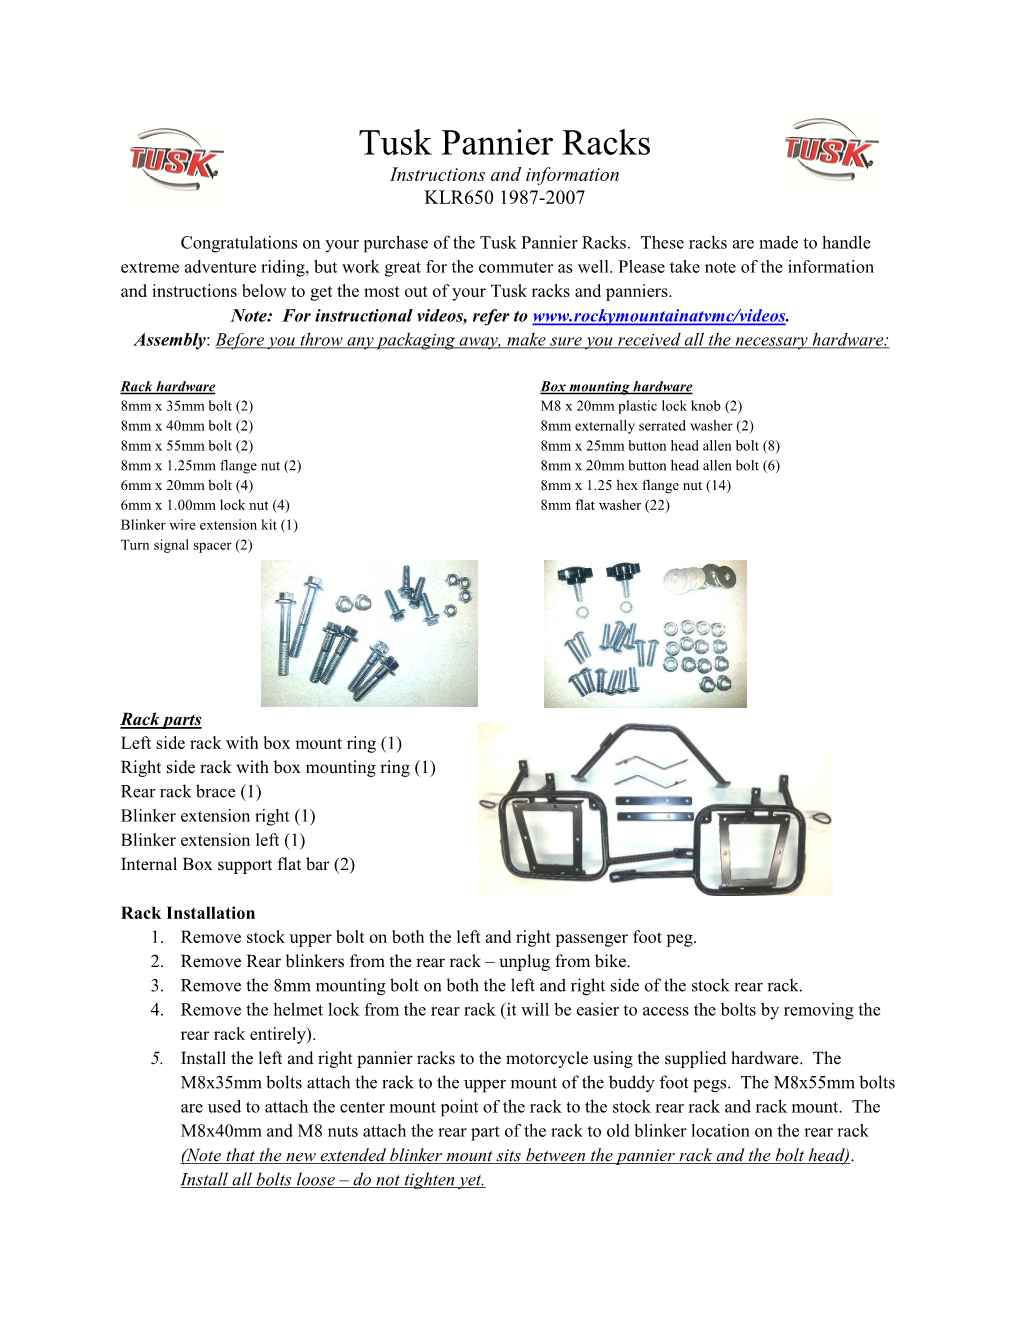 Tusk Pannier Racks Instructions and Information KLR650 1987-2007